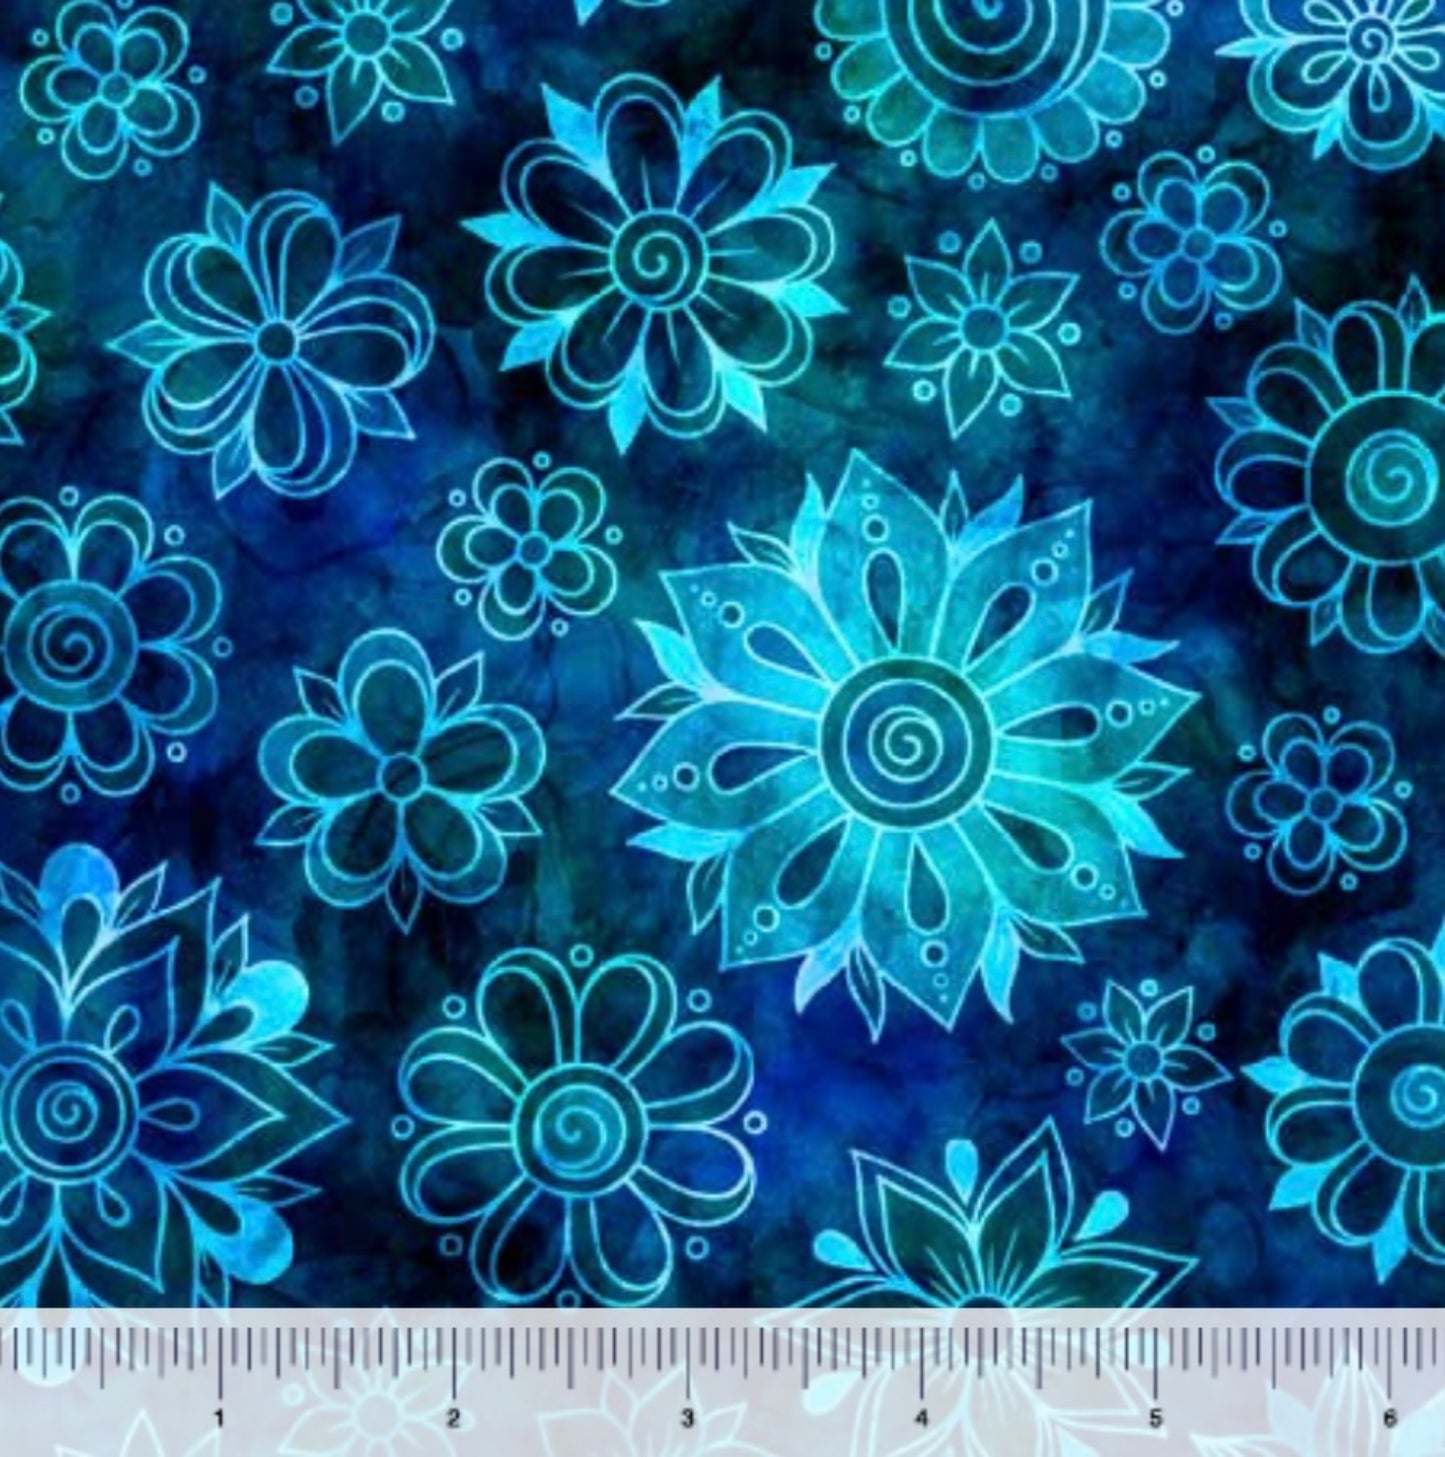 Bohemian Dreams Floral Toss - Shades of Blue - Dan Morris for QT Fabrics